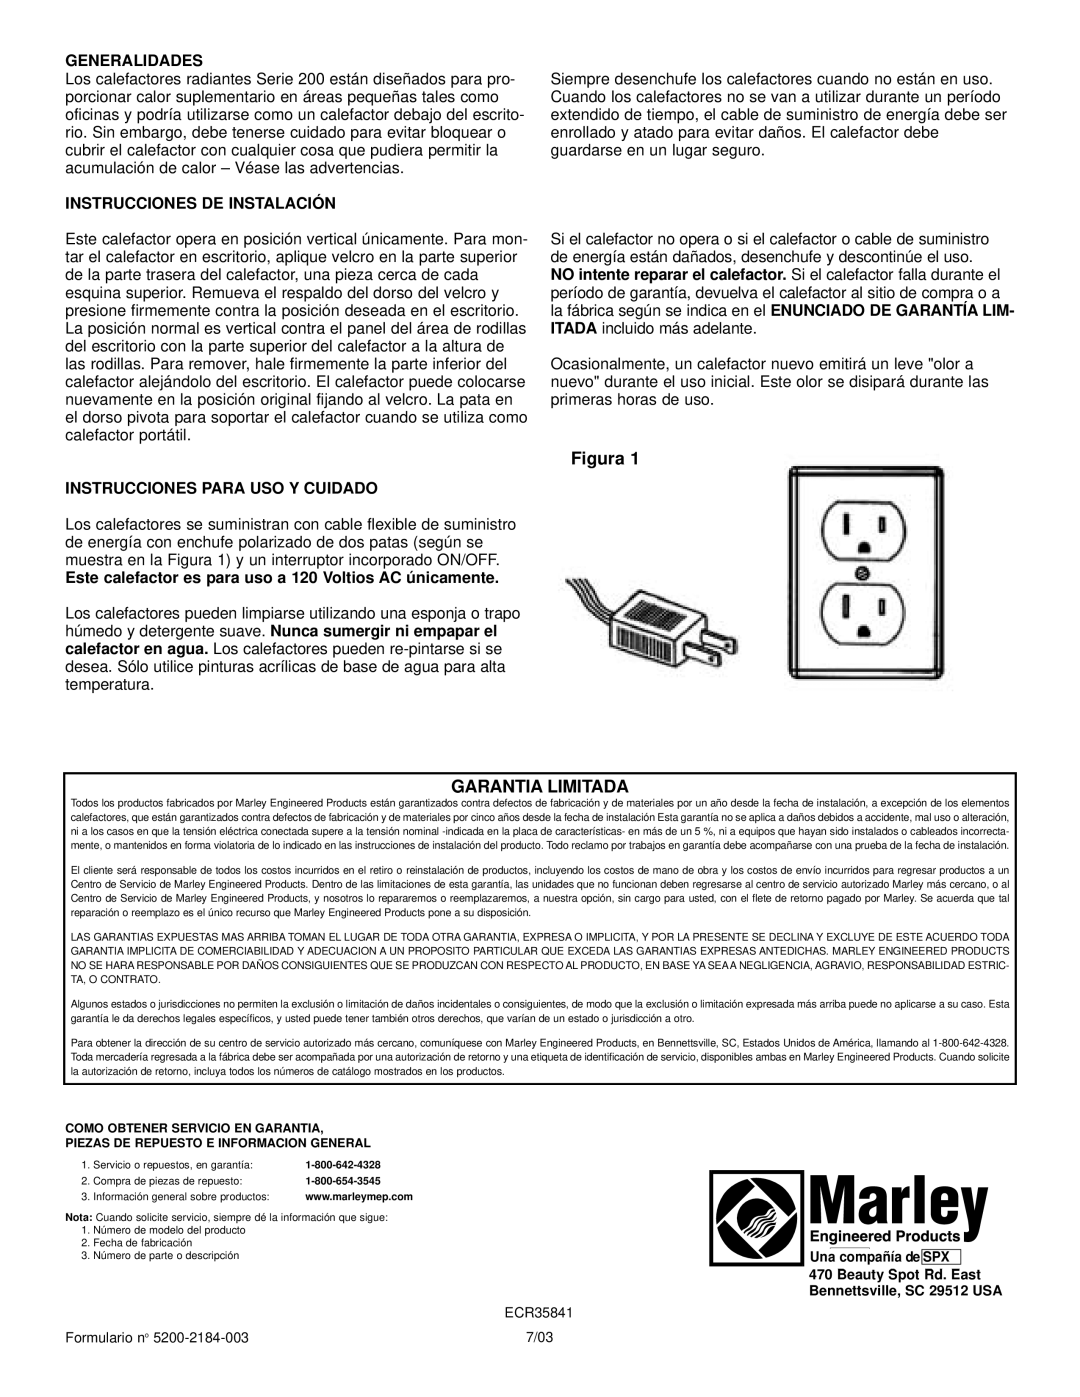 Marley Engineered Products Radiant Heater warranty Figura, Garantia Limitada, Generalidades, Instrucciones De Instalació N 